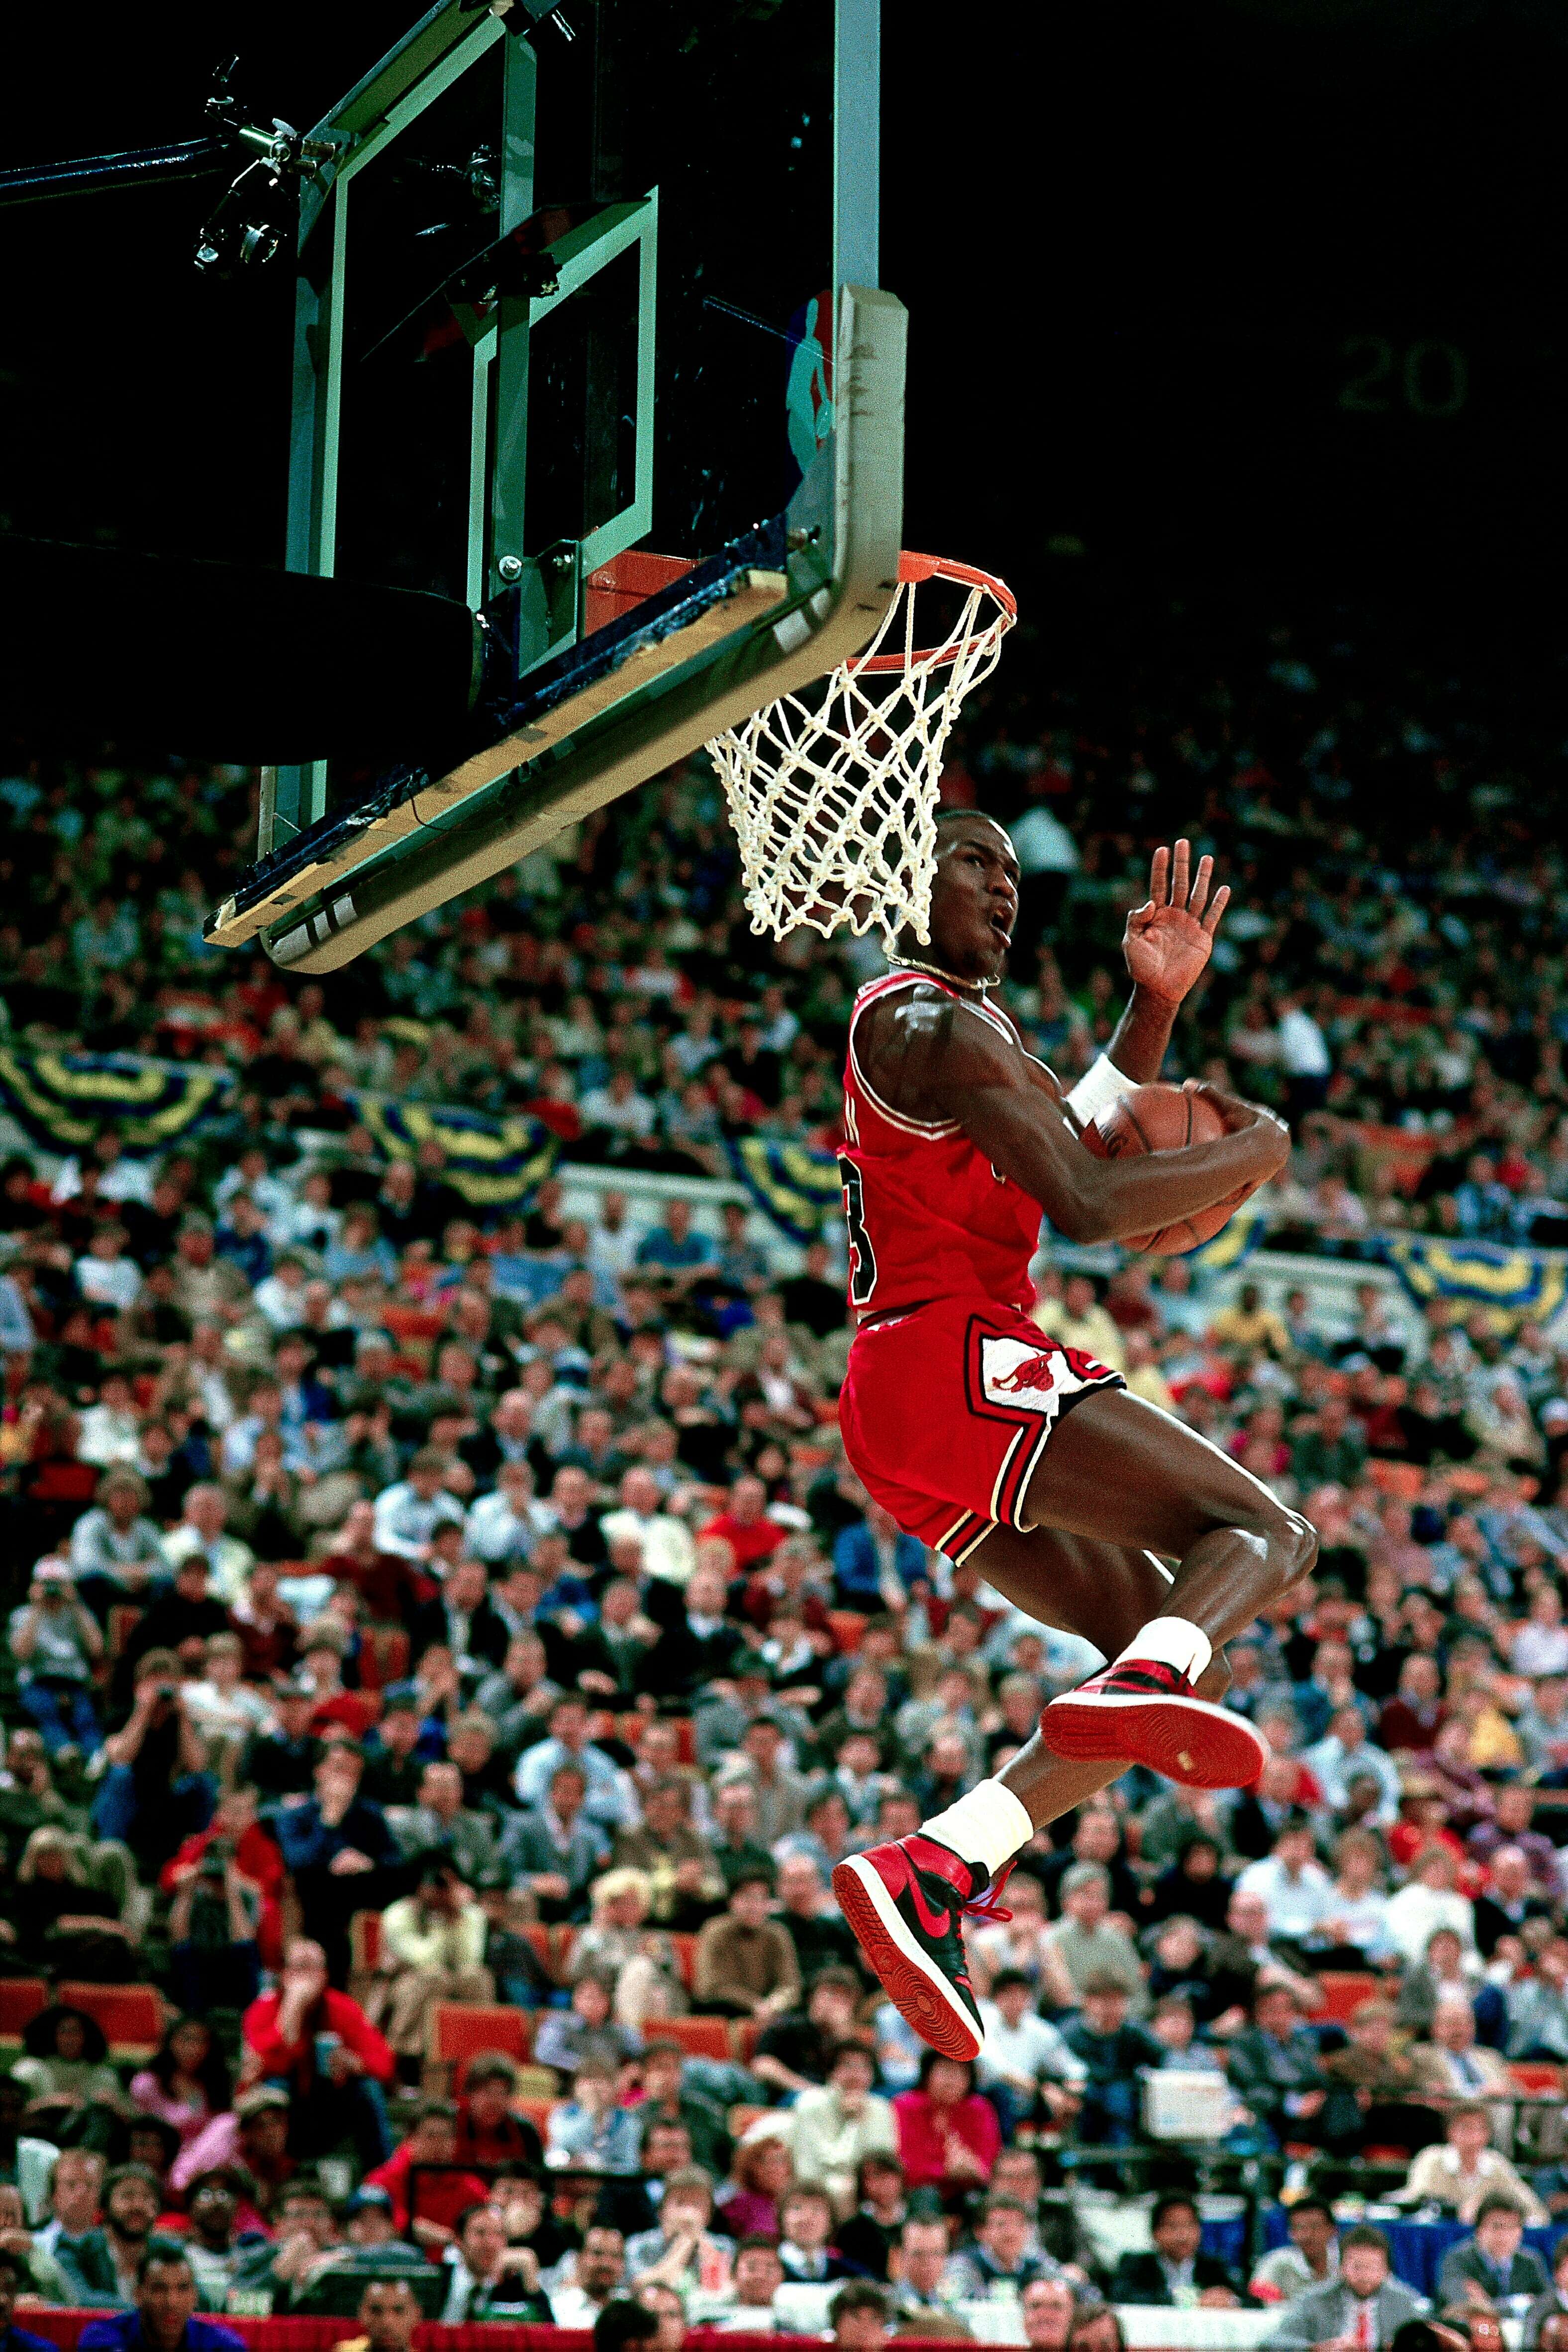 Remember when the NBA banned Michael Jordan's sneakers?